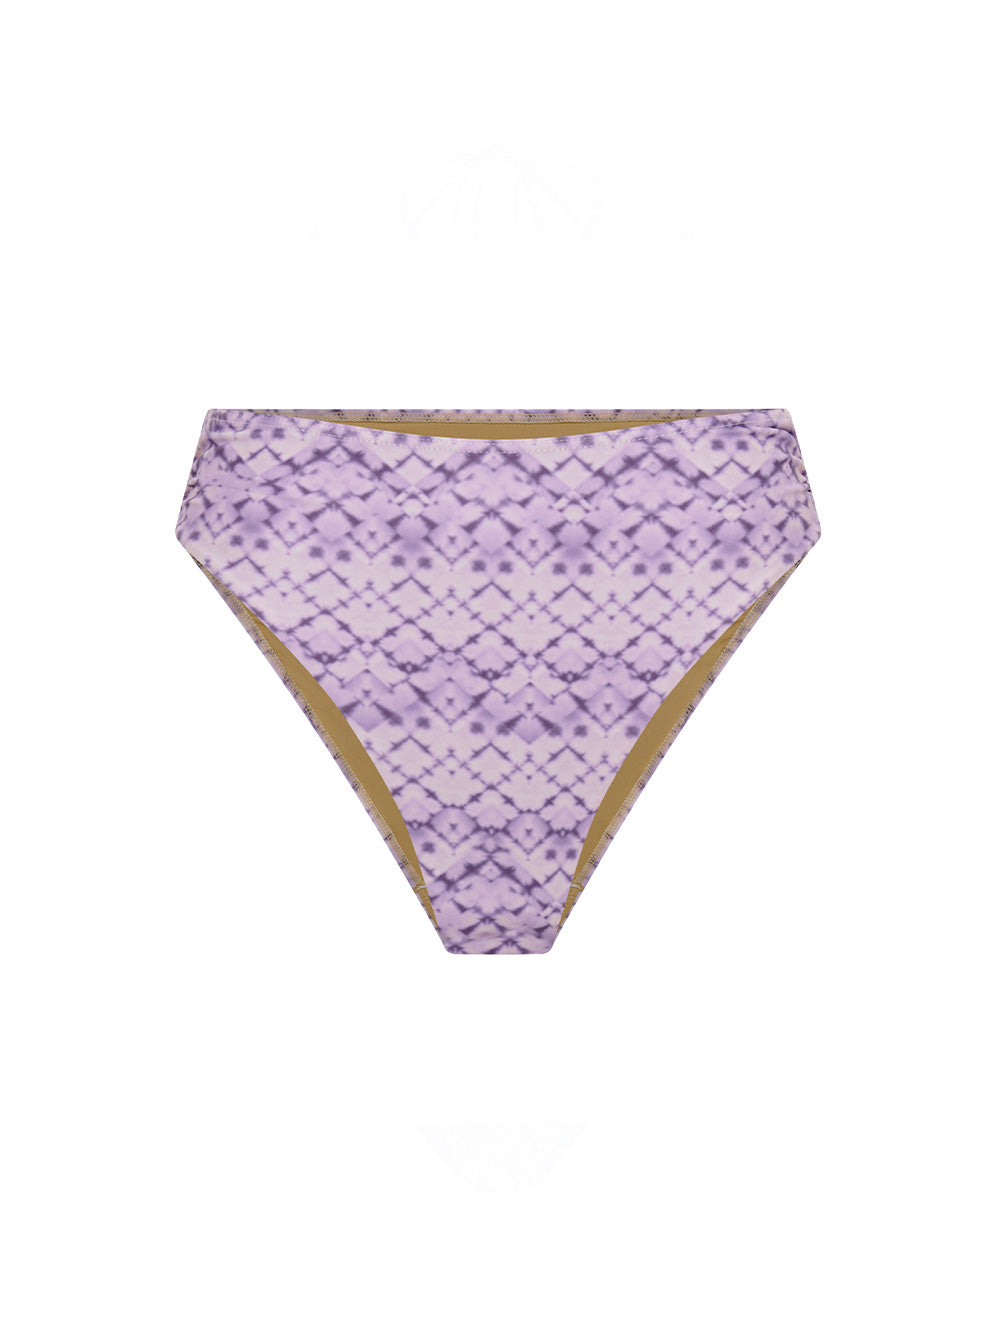 Alice High Waist Bikini Bottom KIVARI | Purple tie dye printed high waisted bikini bottoms